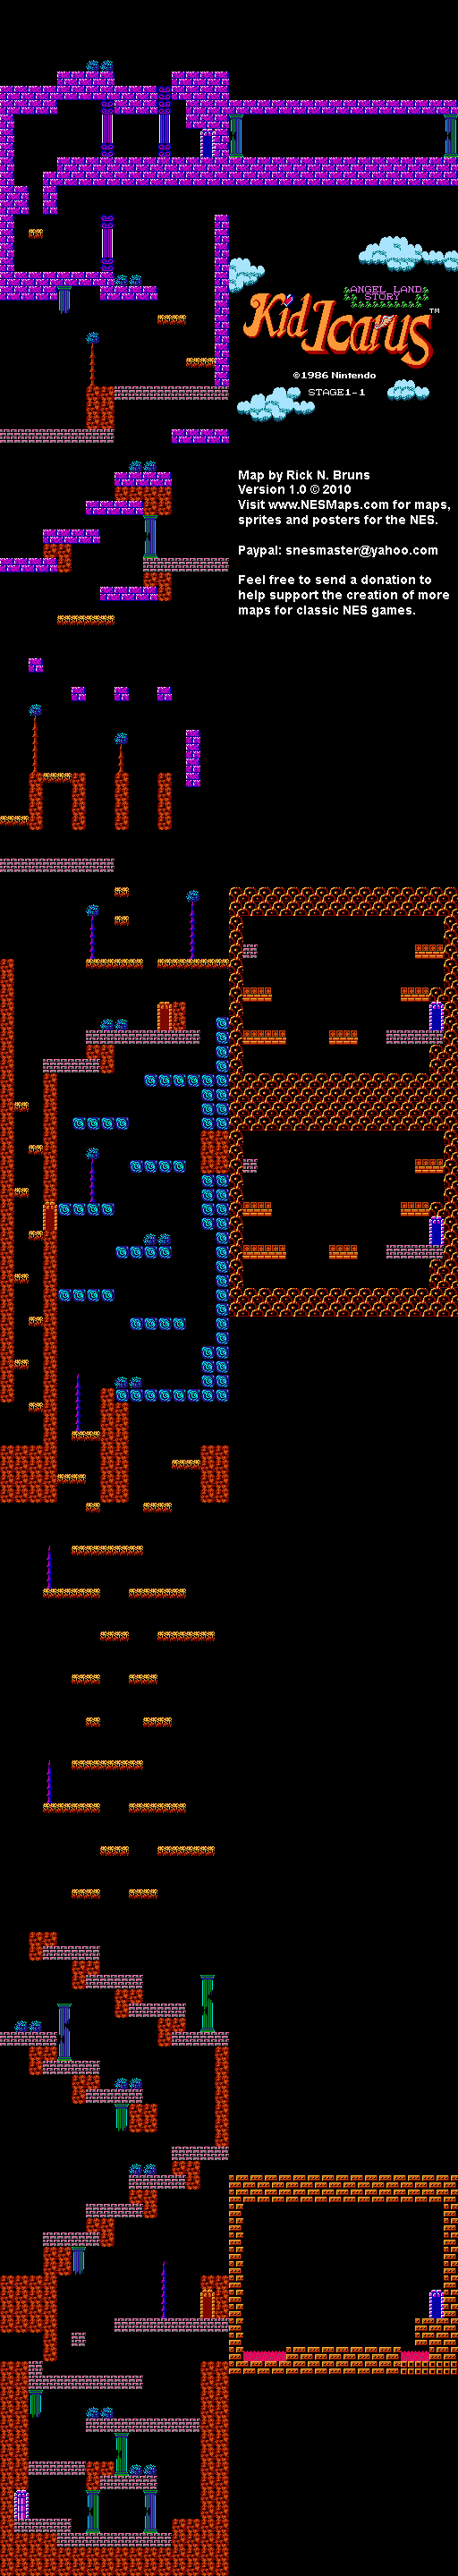 Kid Icarus - Stage 1-1 - NES Map BG